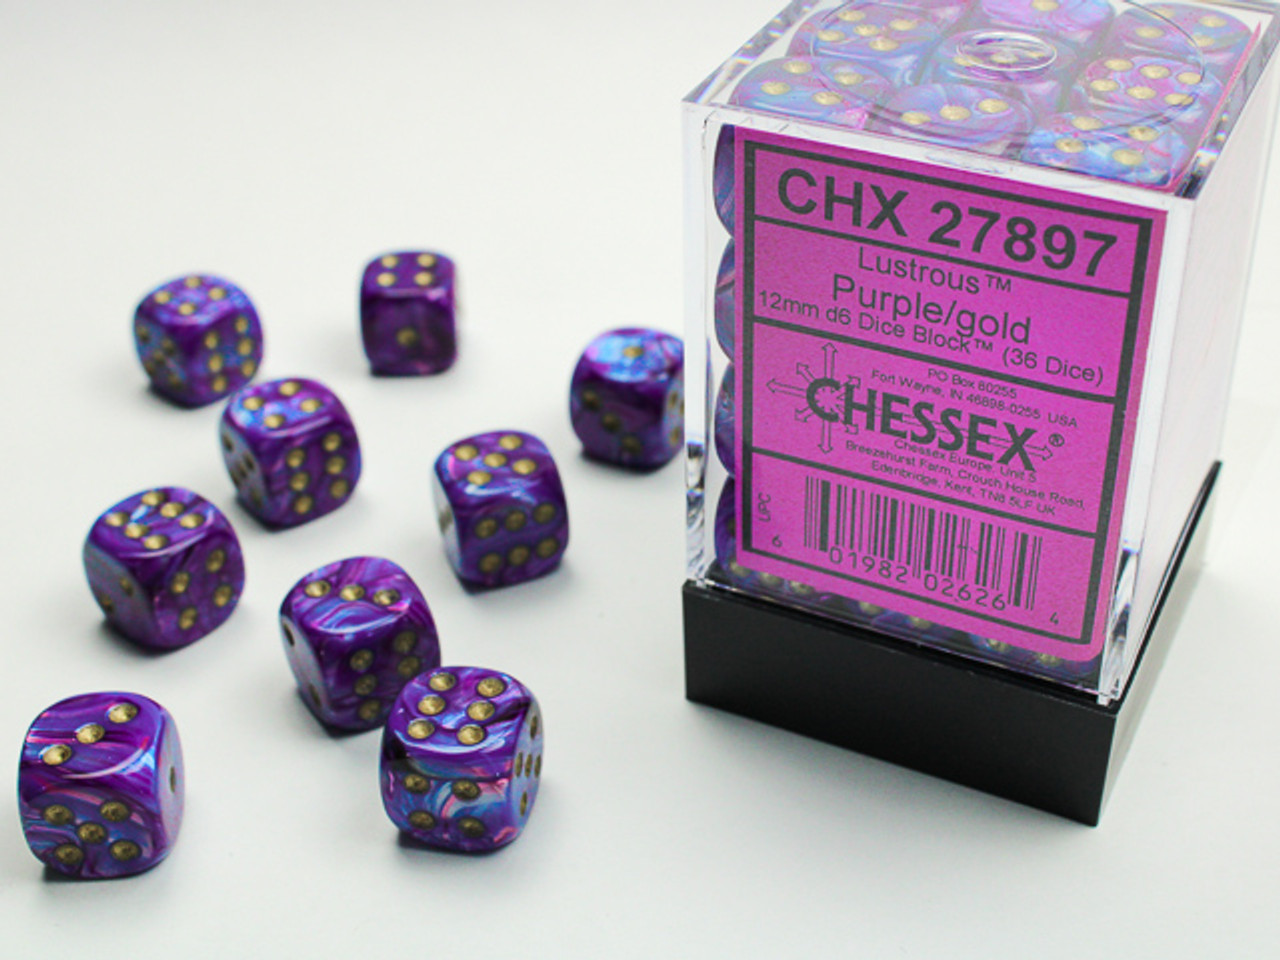 27897 - Lustrous® 12mm d6 Purple/gold Dice Block™ (36 dice)